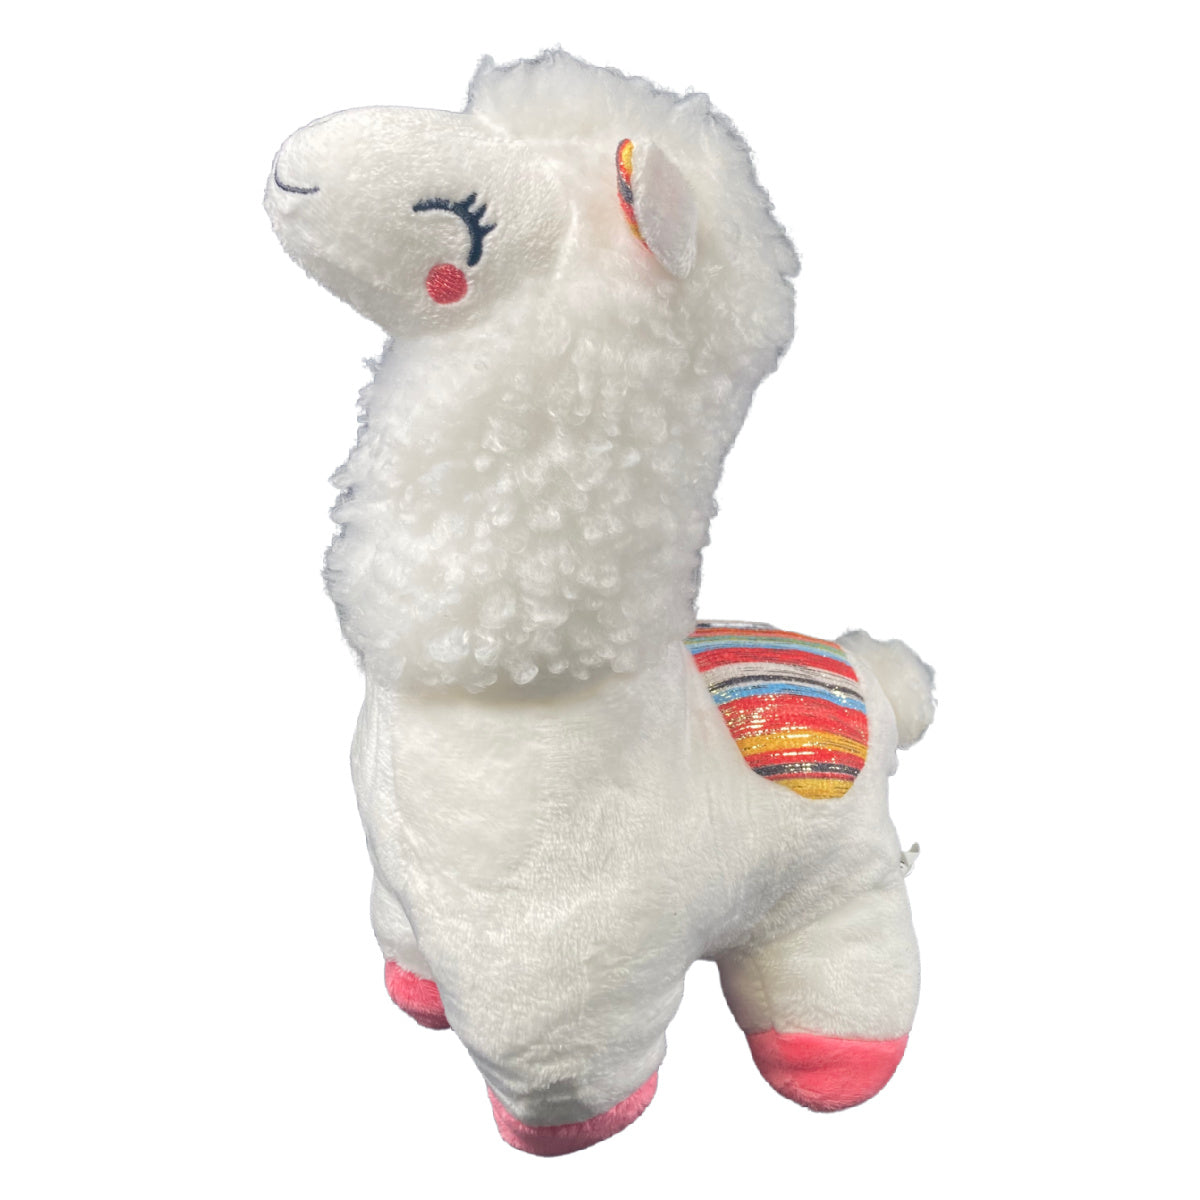 Alpaca Stuffed Animal Plush Toy - Plushie Llama Stuffed Animal 10" Inches